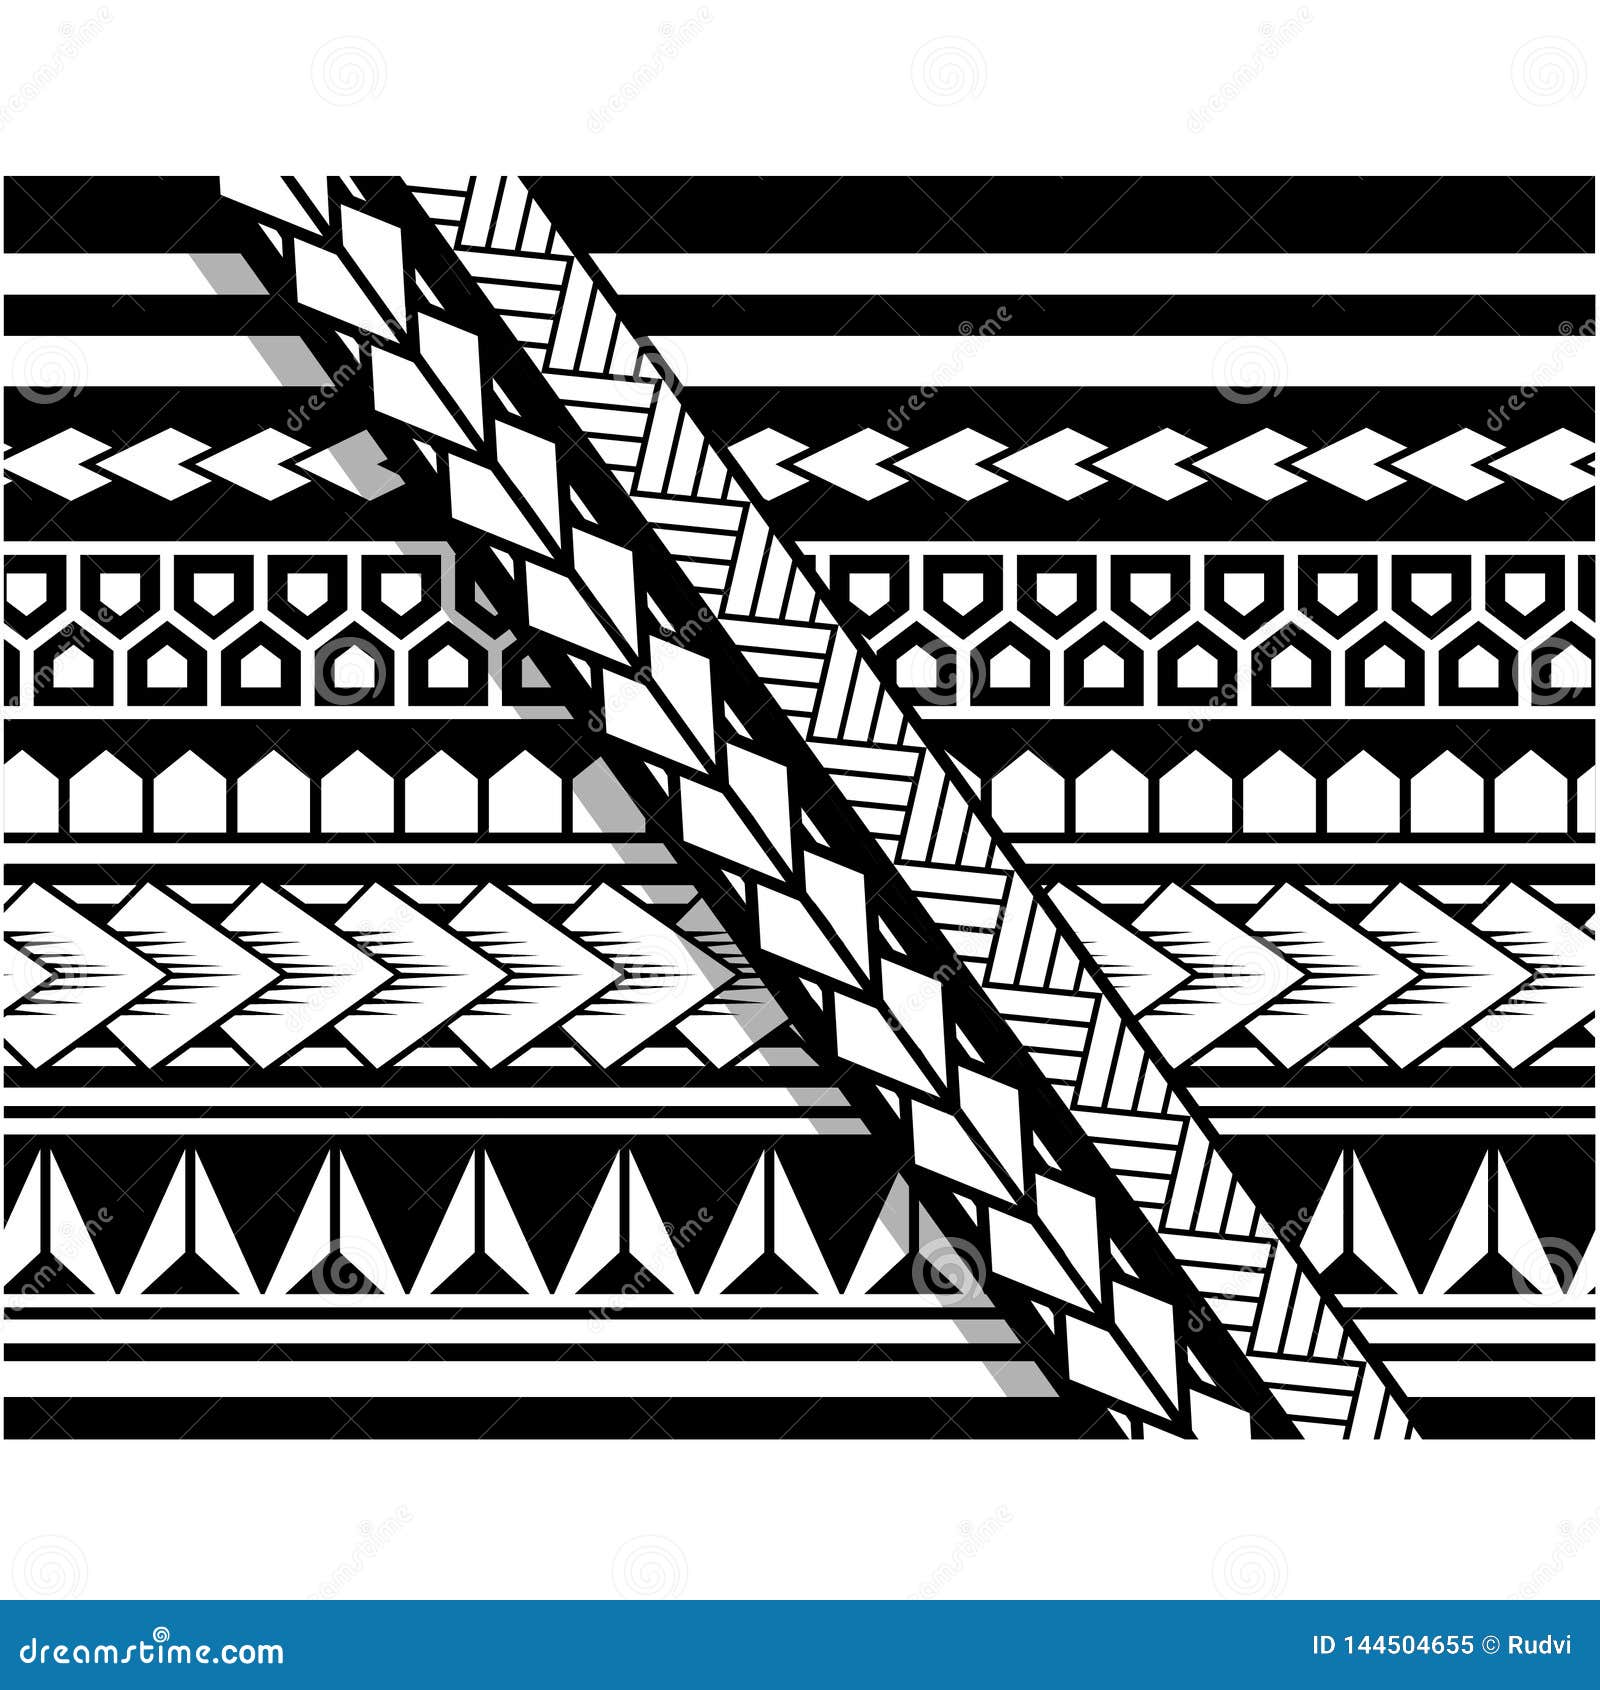 Polynesian Tribal Tattoo Designs Polynesian Armband Or Forearm Make A Stencil Tattoo Design Tribe Border Stock Vector Illustration Of Sleeve Ornament 144504655